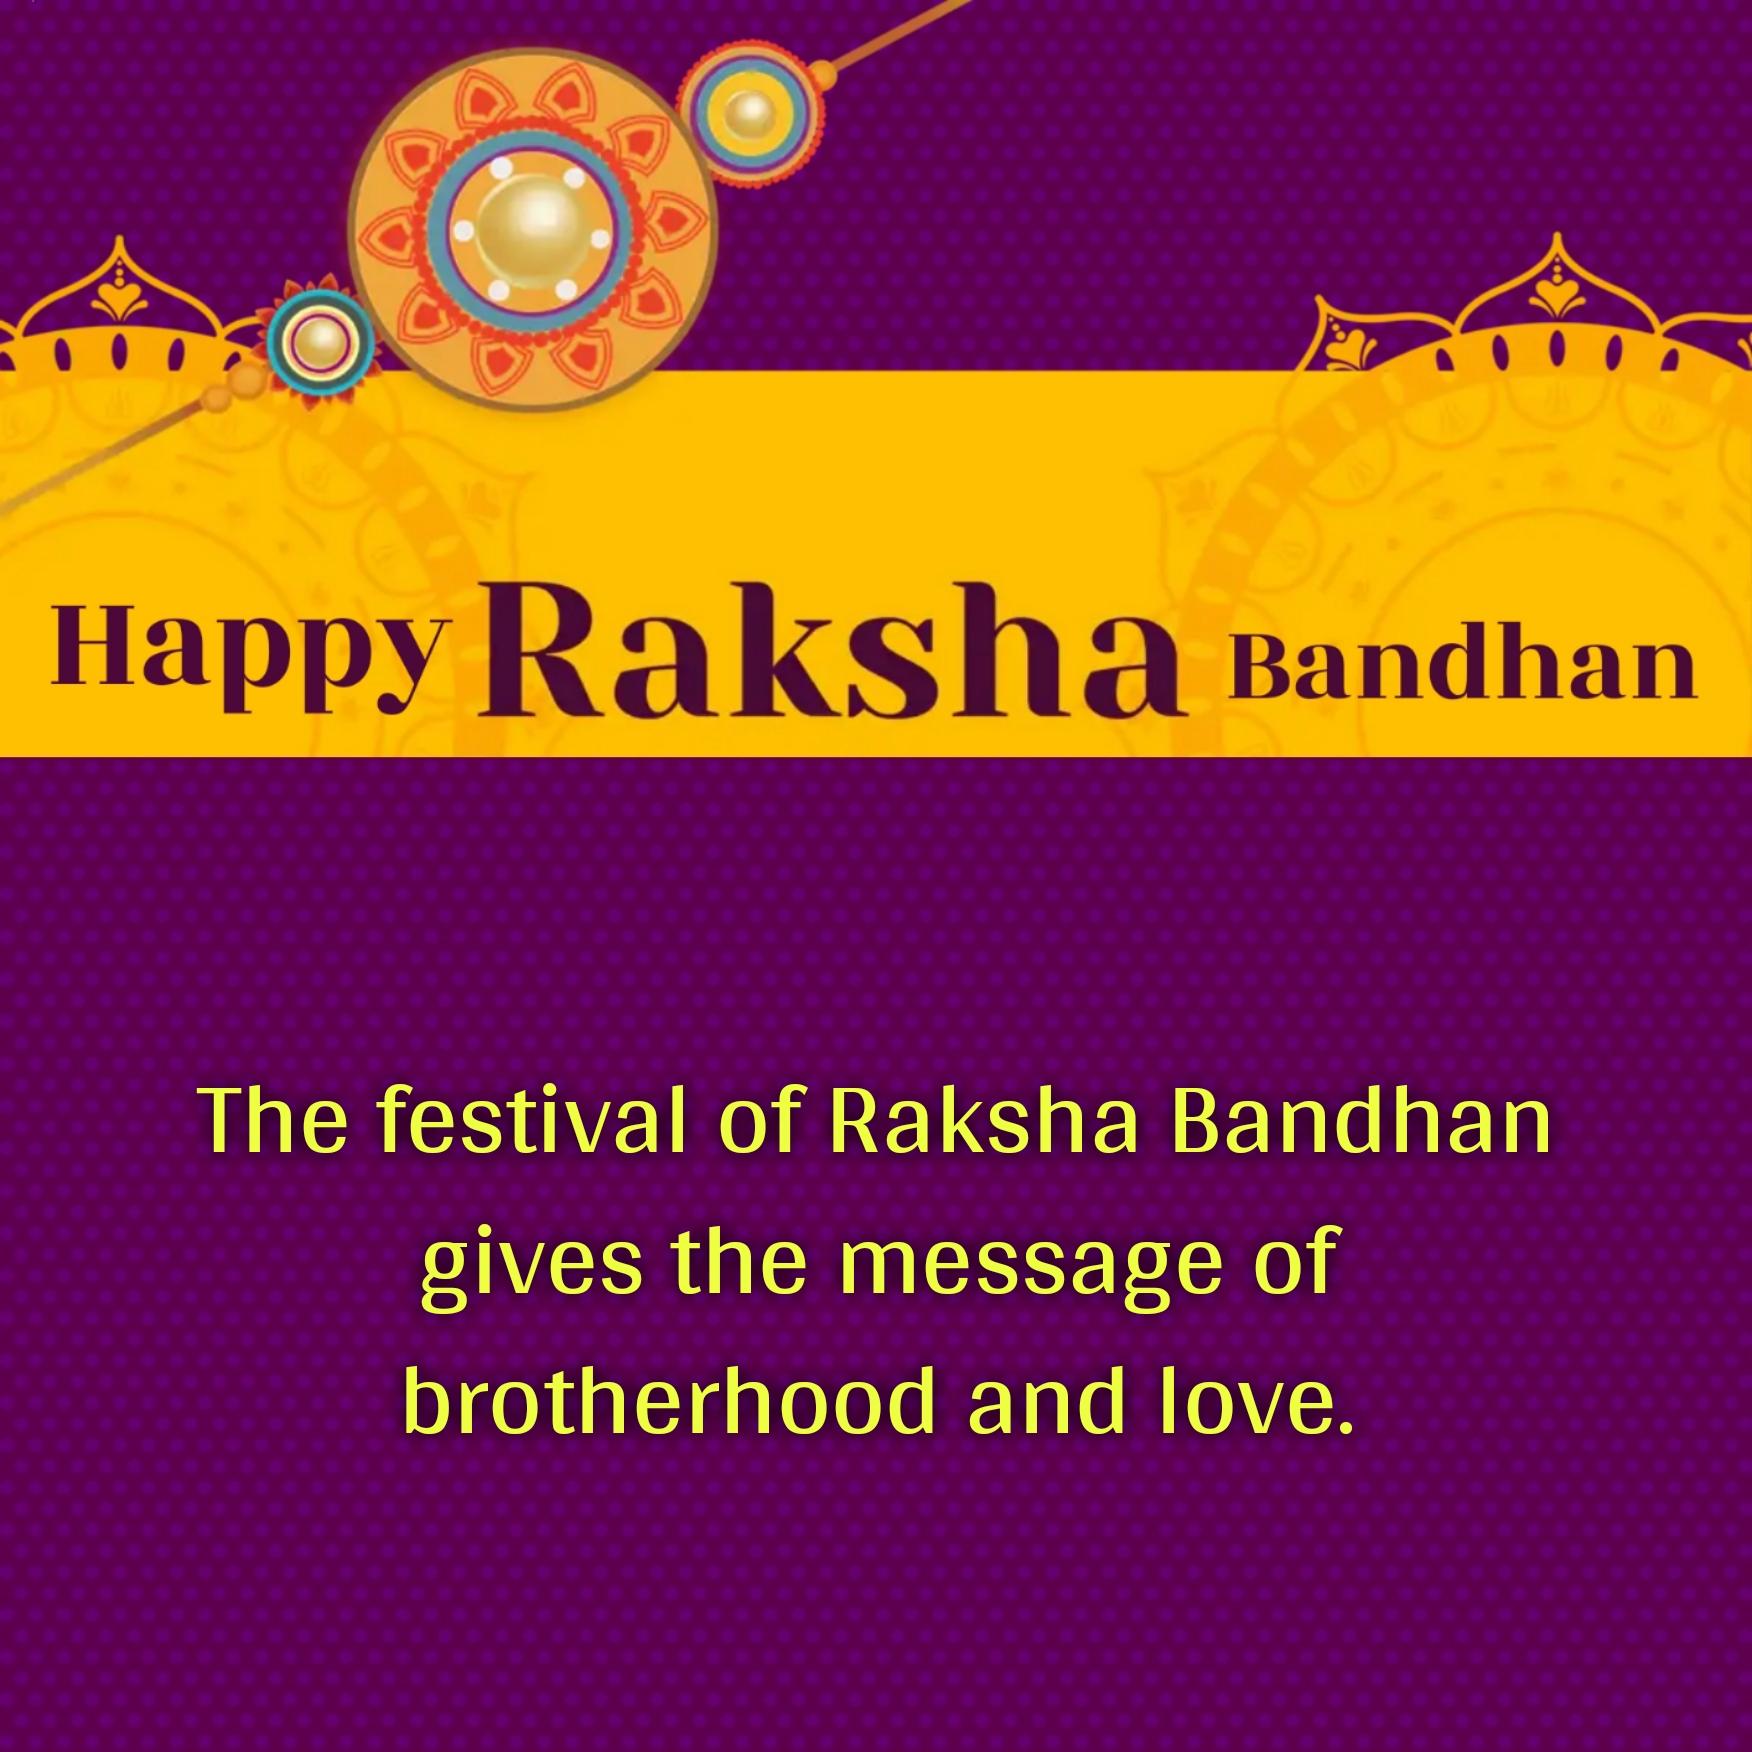 The festival of Raksha Bandhan gives the message